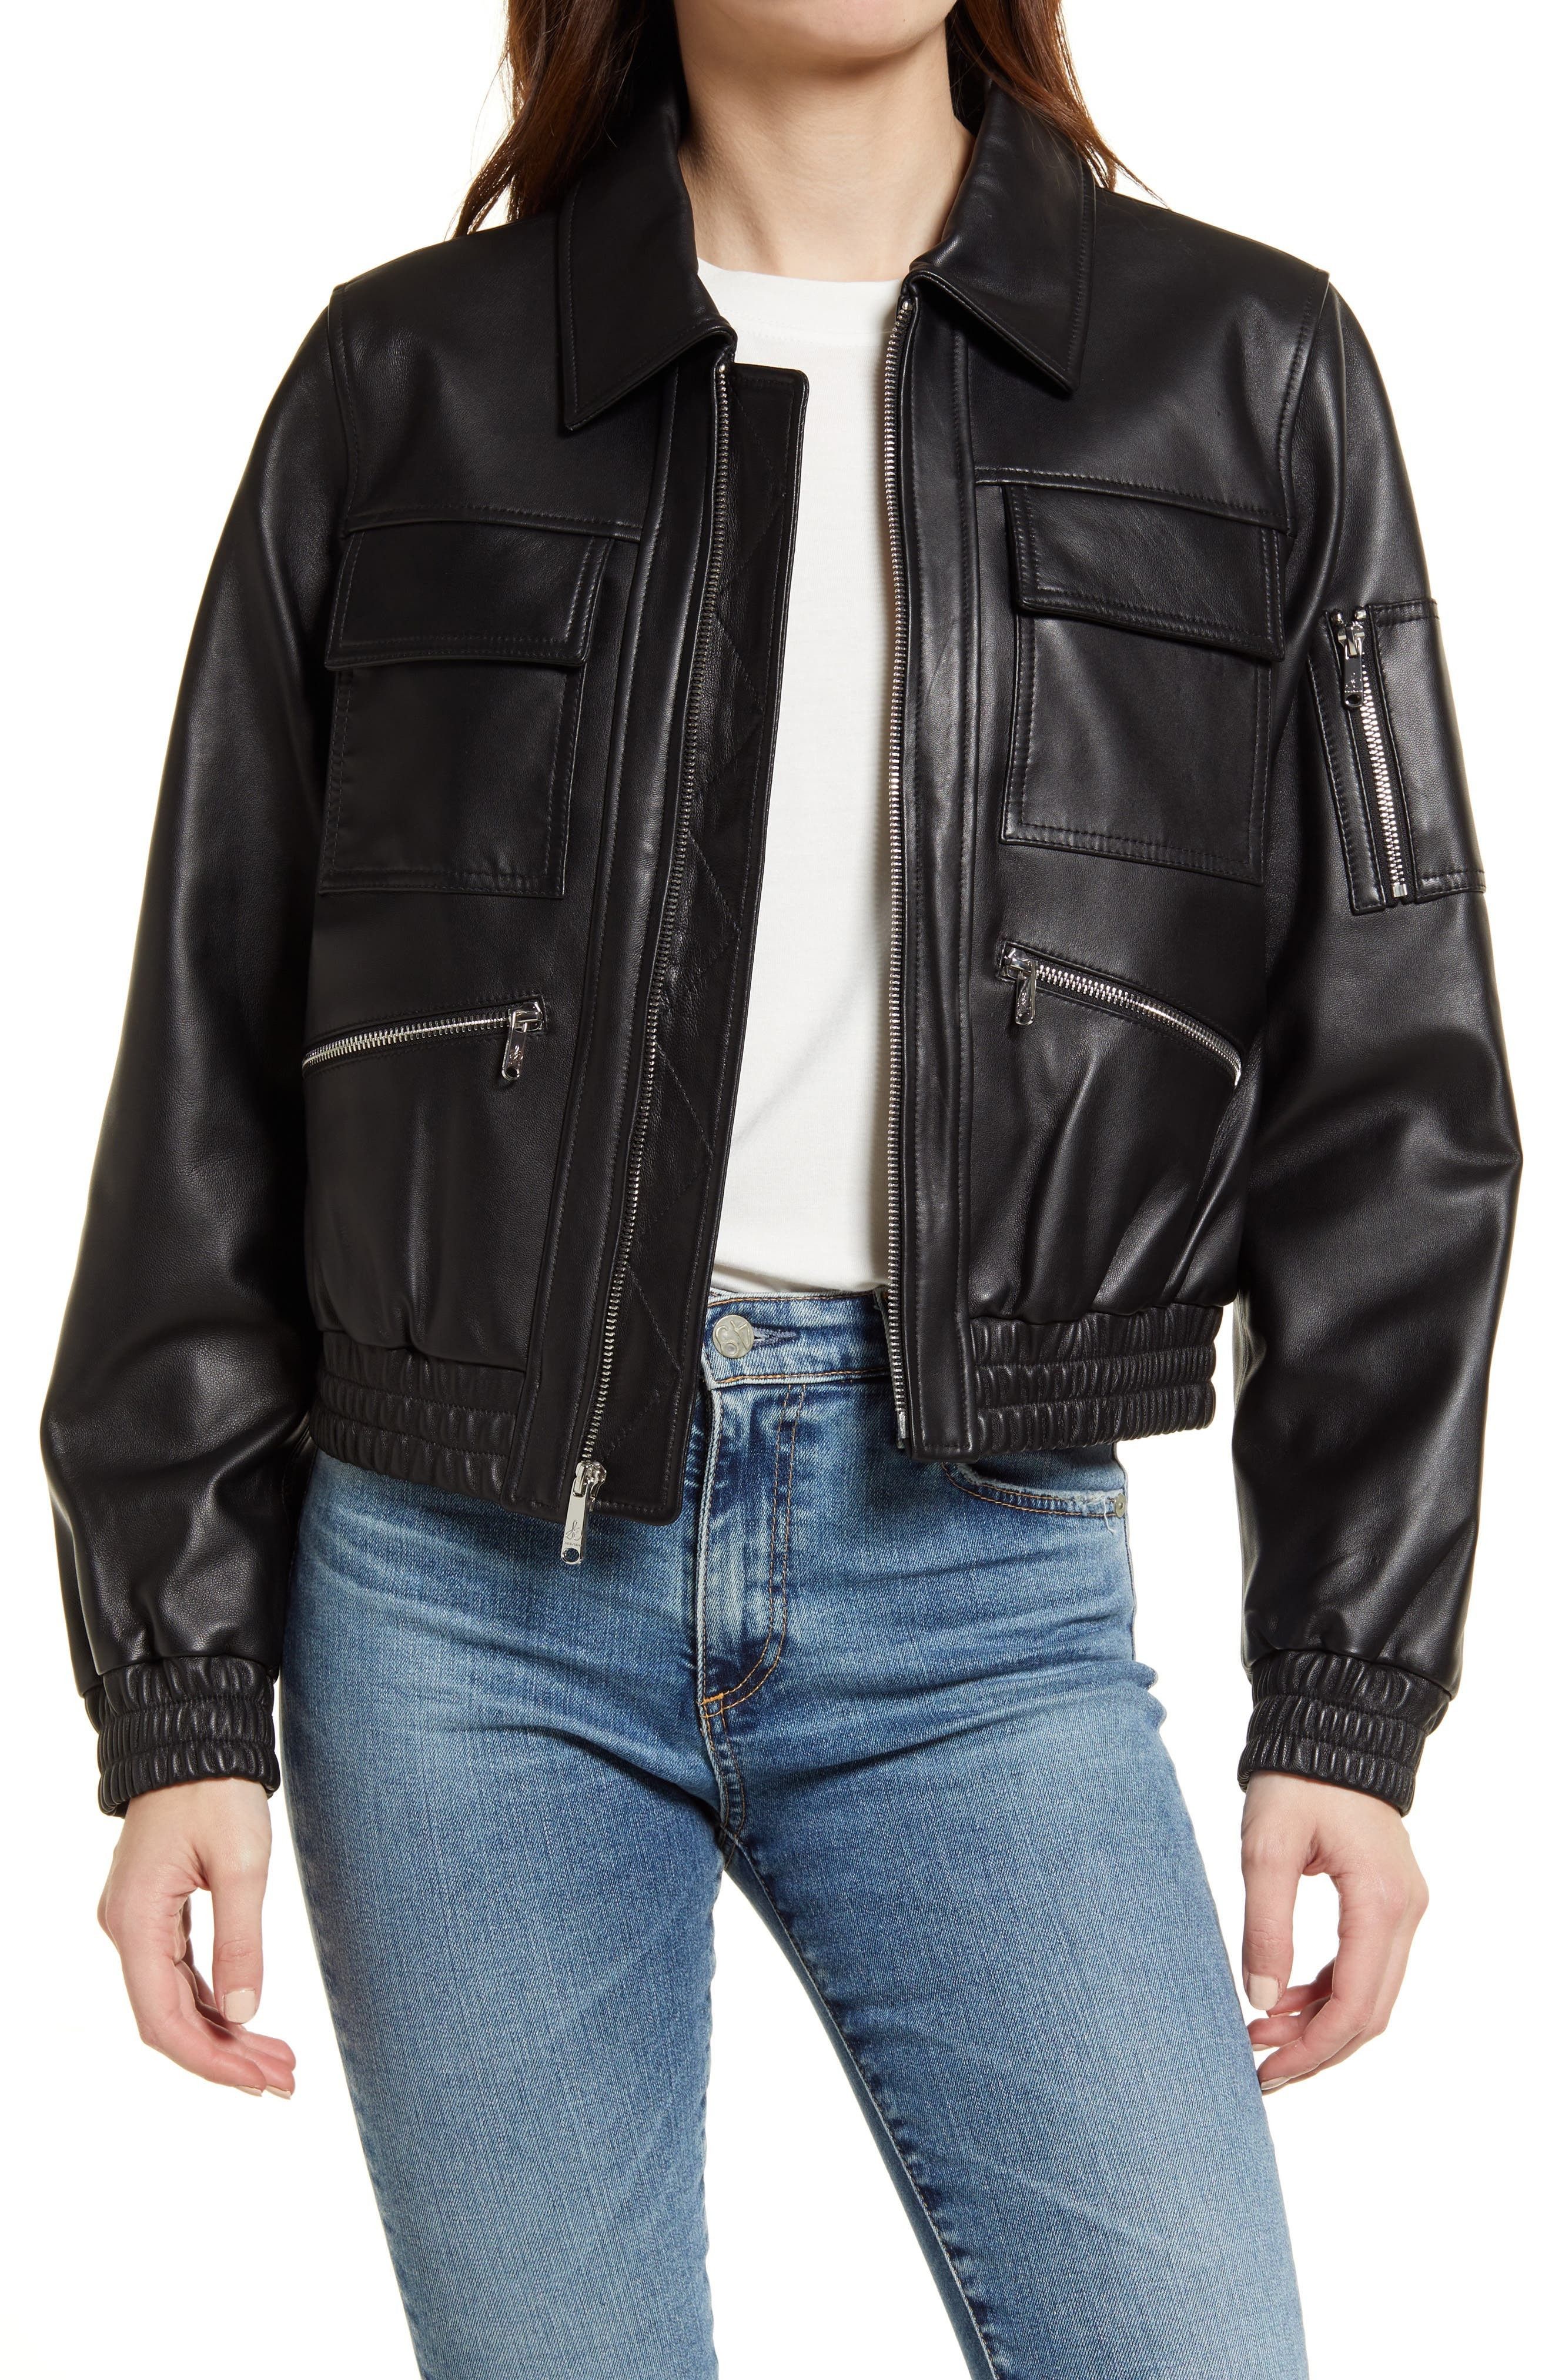 Sam Edelman Leather Bomber Jacket in Black at Nordstrom, Size Small | Nordstrom